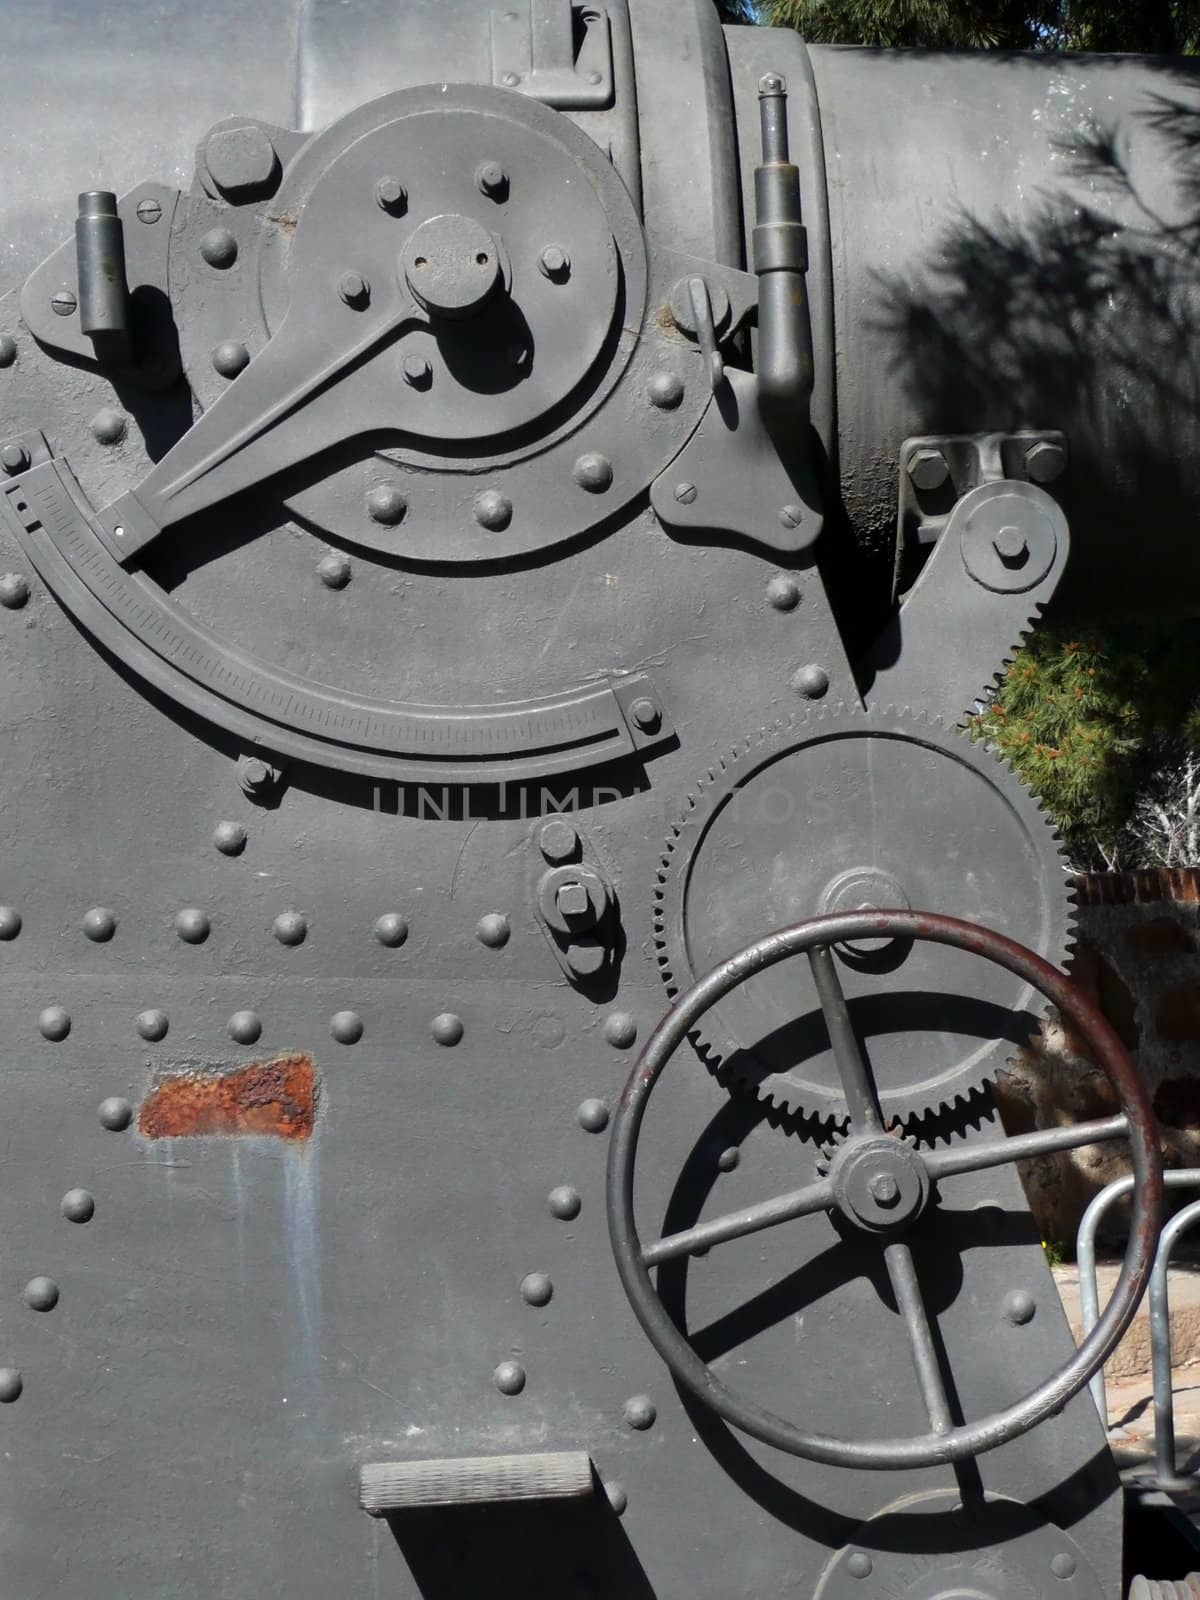 industrial background, detail of clockwork mechanism